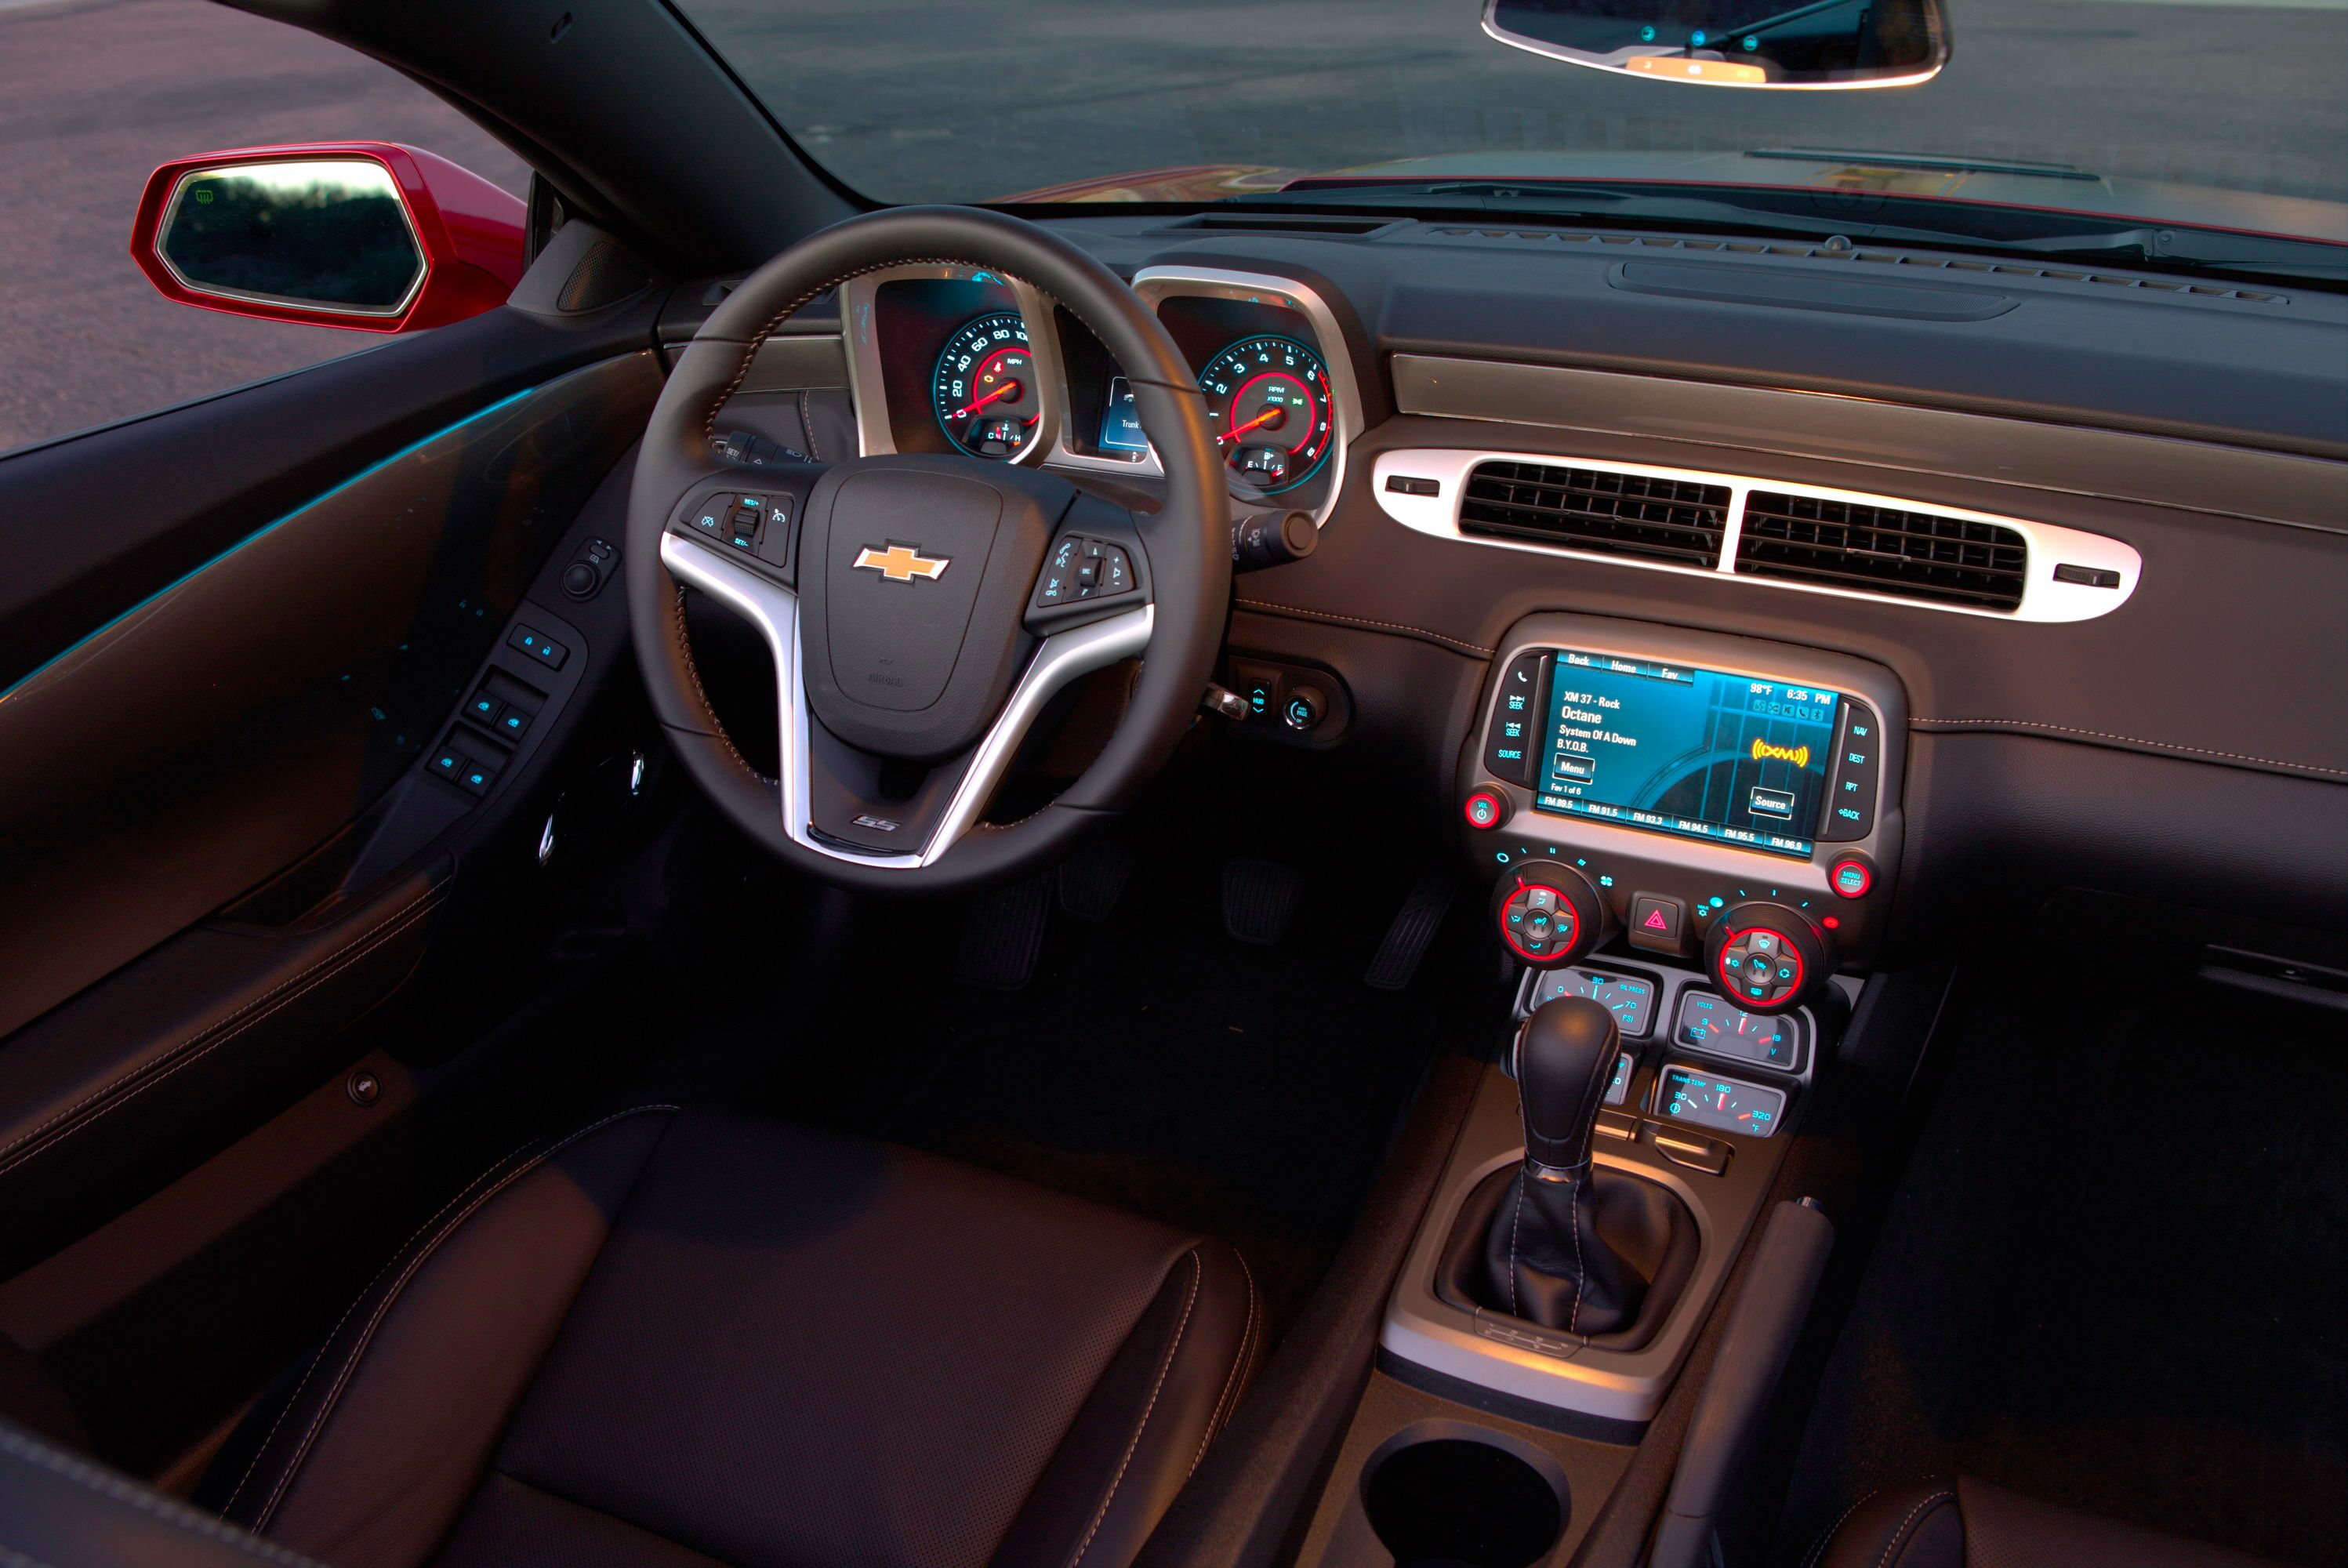 2014 - 2015 Chevrolet Camaro SS